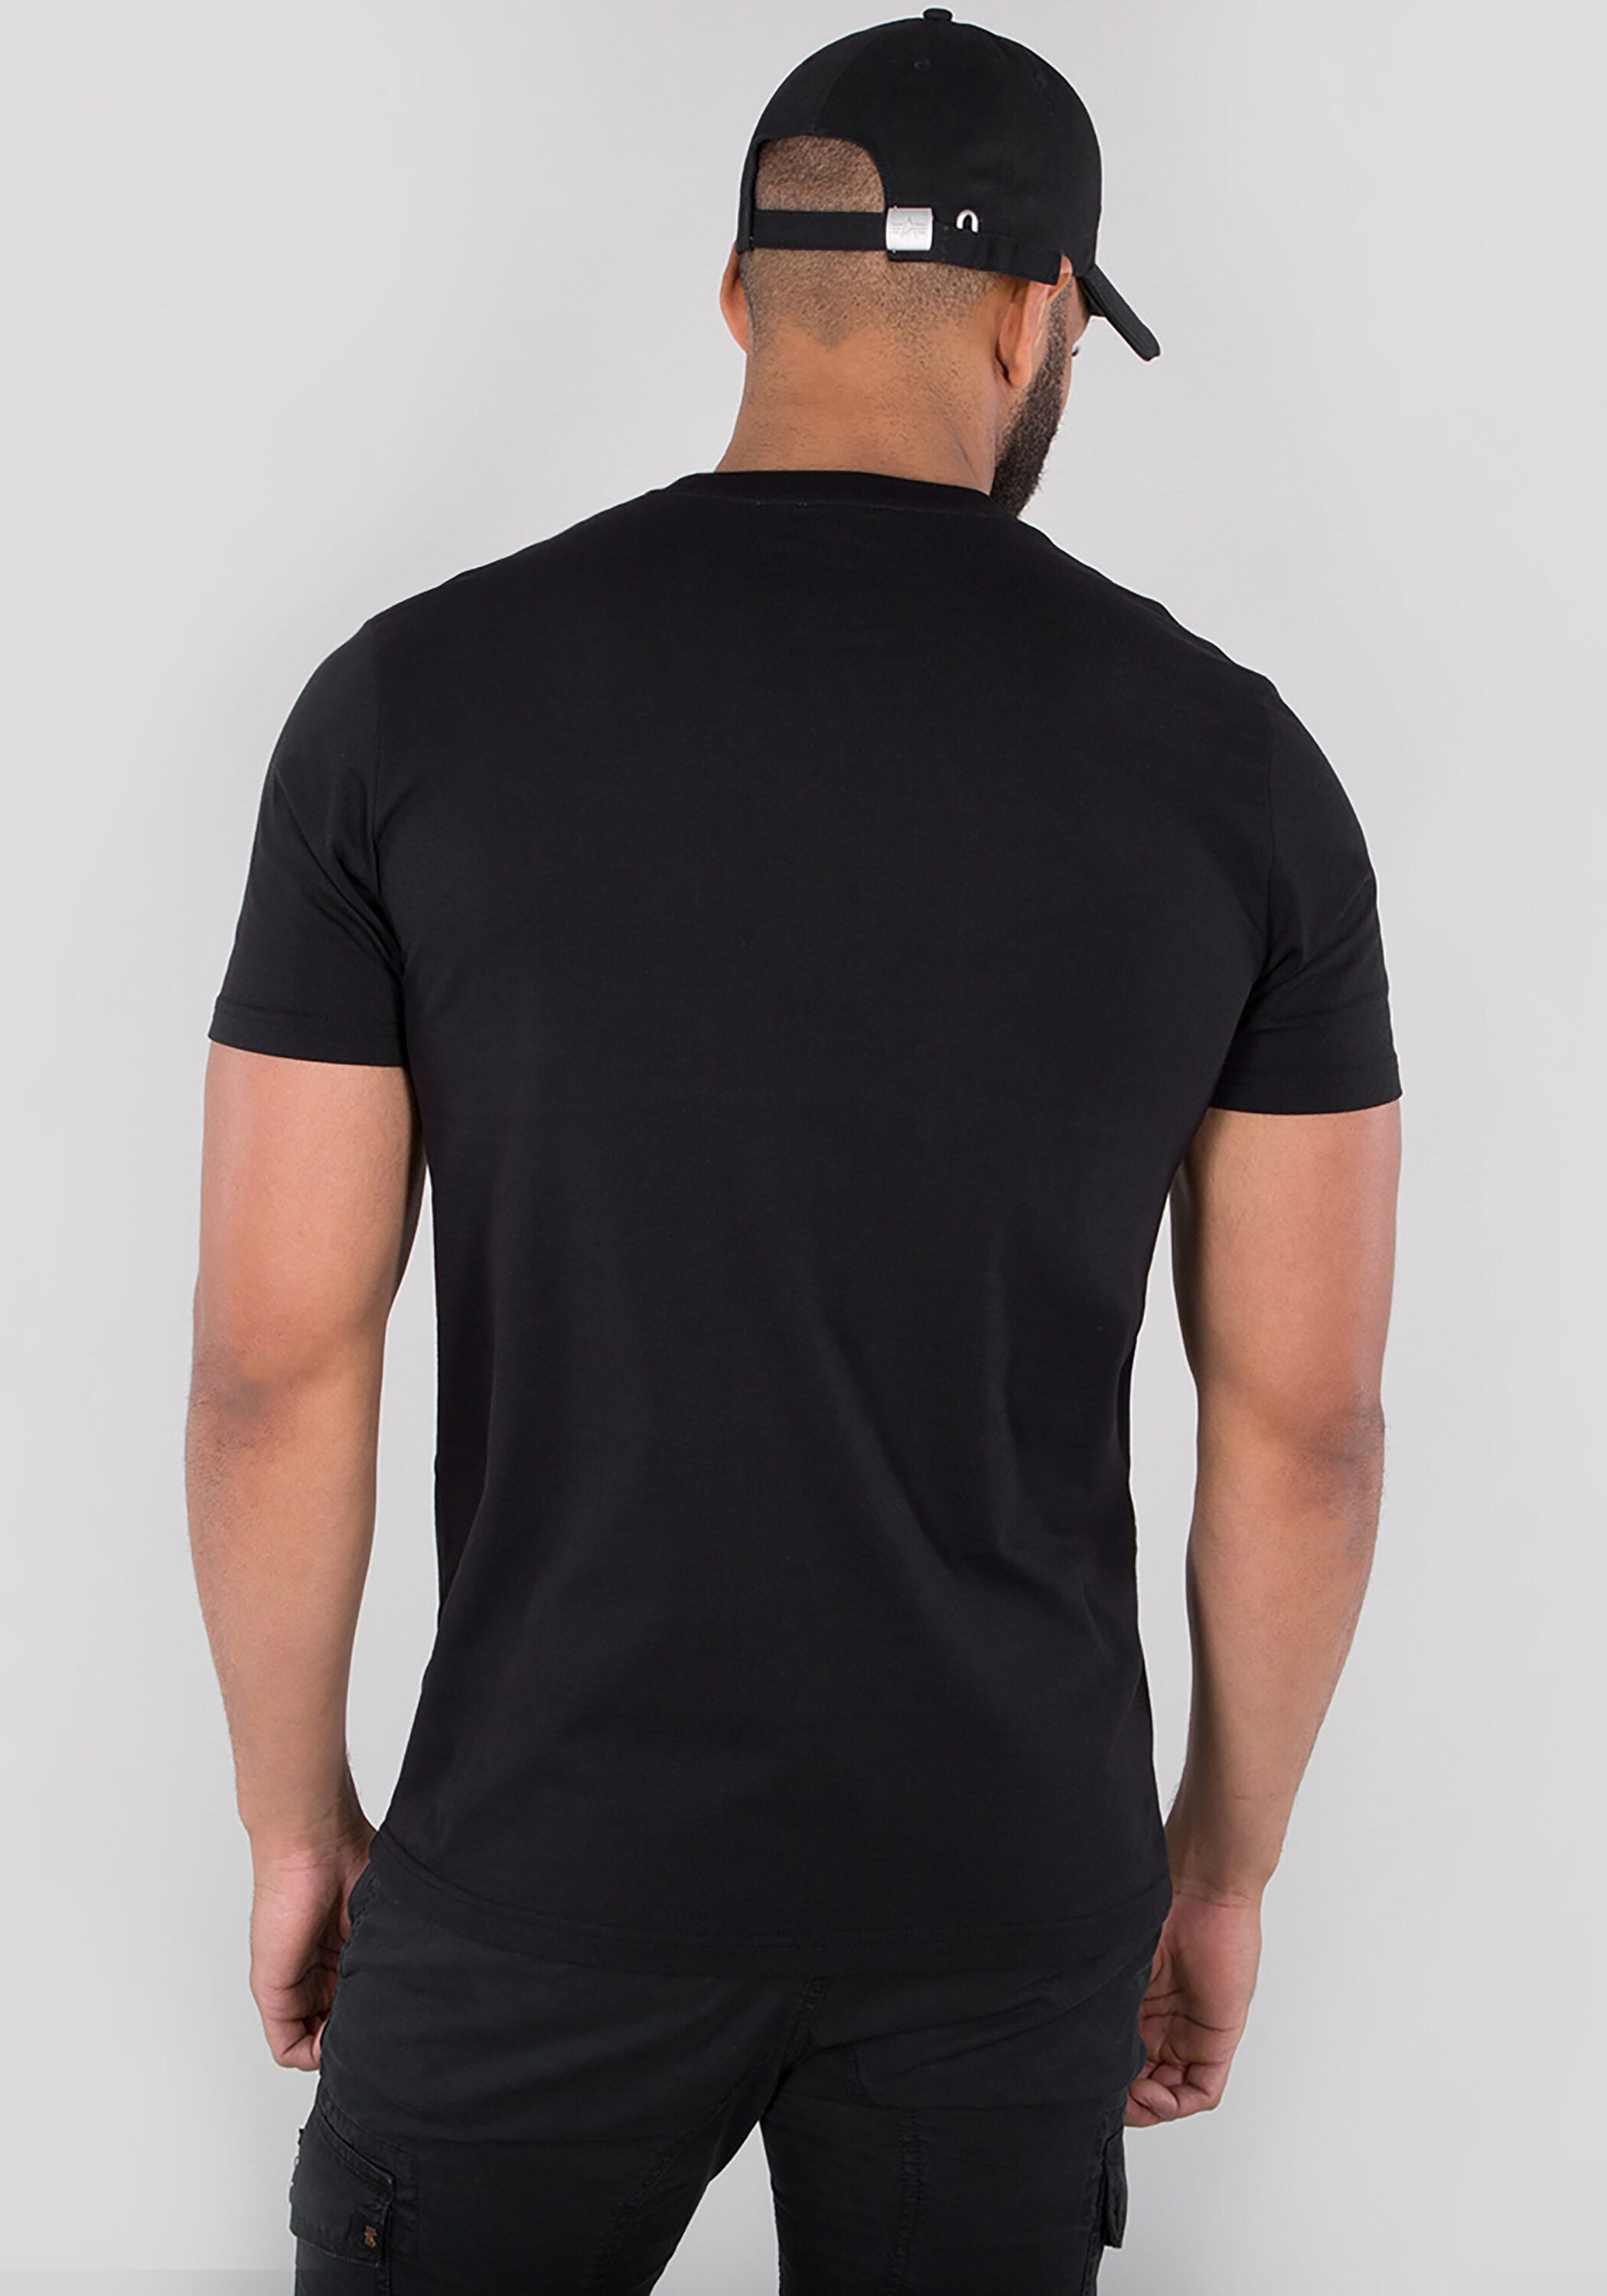 Industries »Alpha - Alpha Black Industries Inlay T-Shirt BAUR Alpha T-Shirts Friday T« | Men